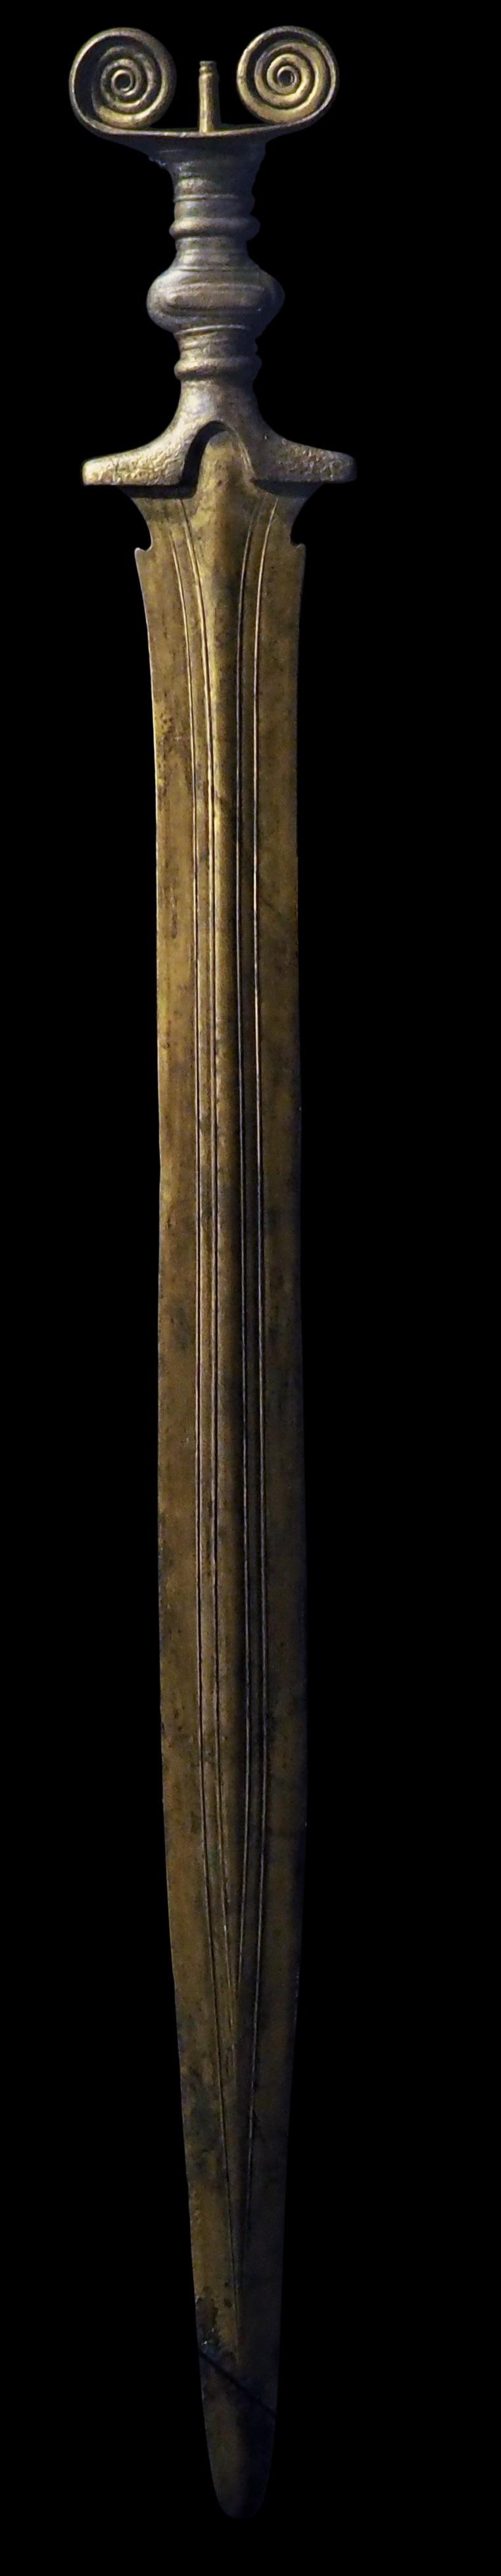 Sword from the Hallstatt culture, 1300-800BE, France.jpg